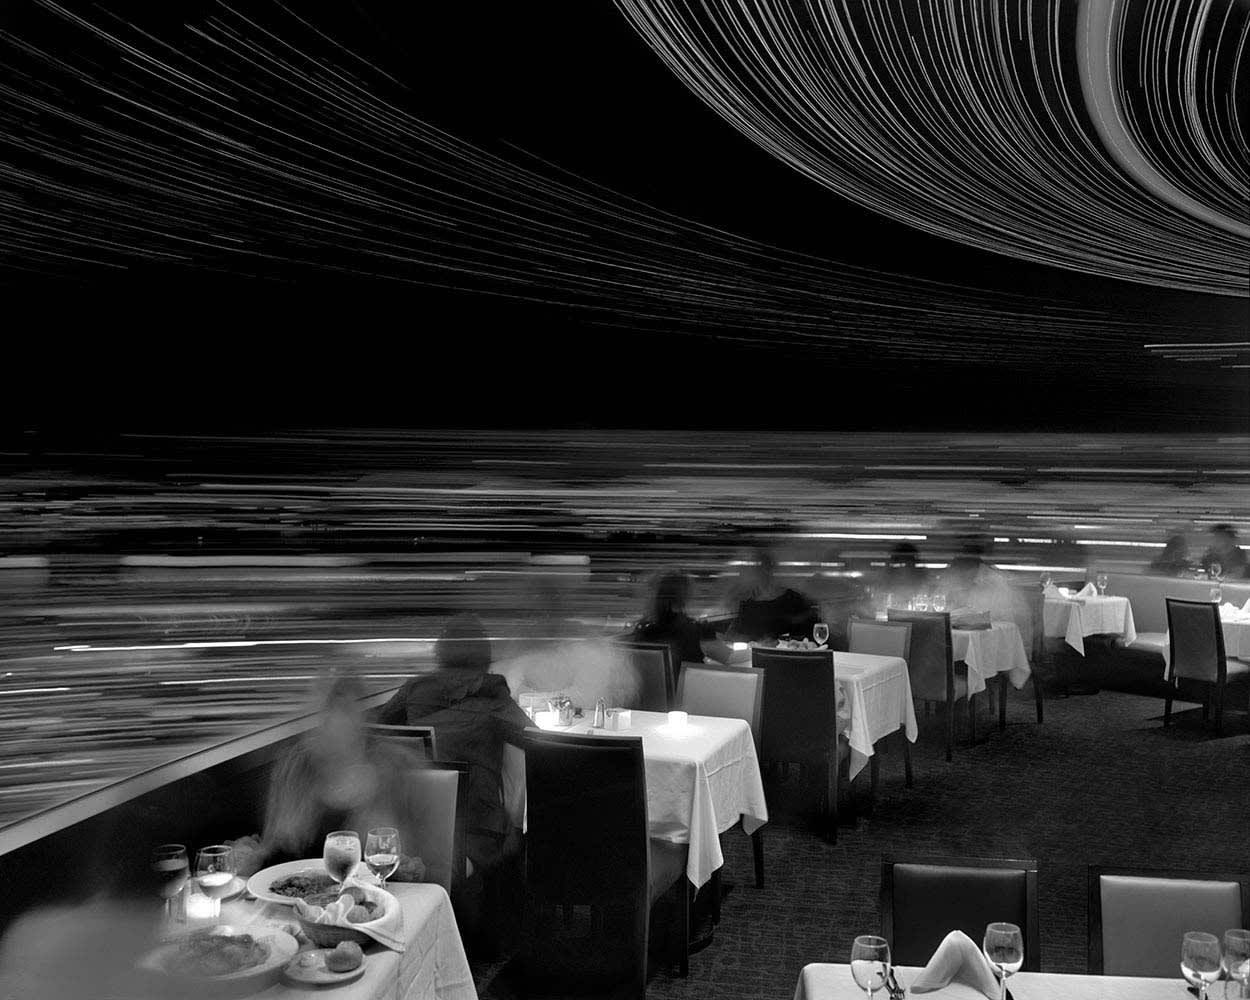 Matthew Pillsbury black and white photograph of diners at revolving restaurant portrayed through long exposure shot